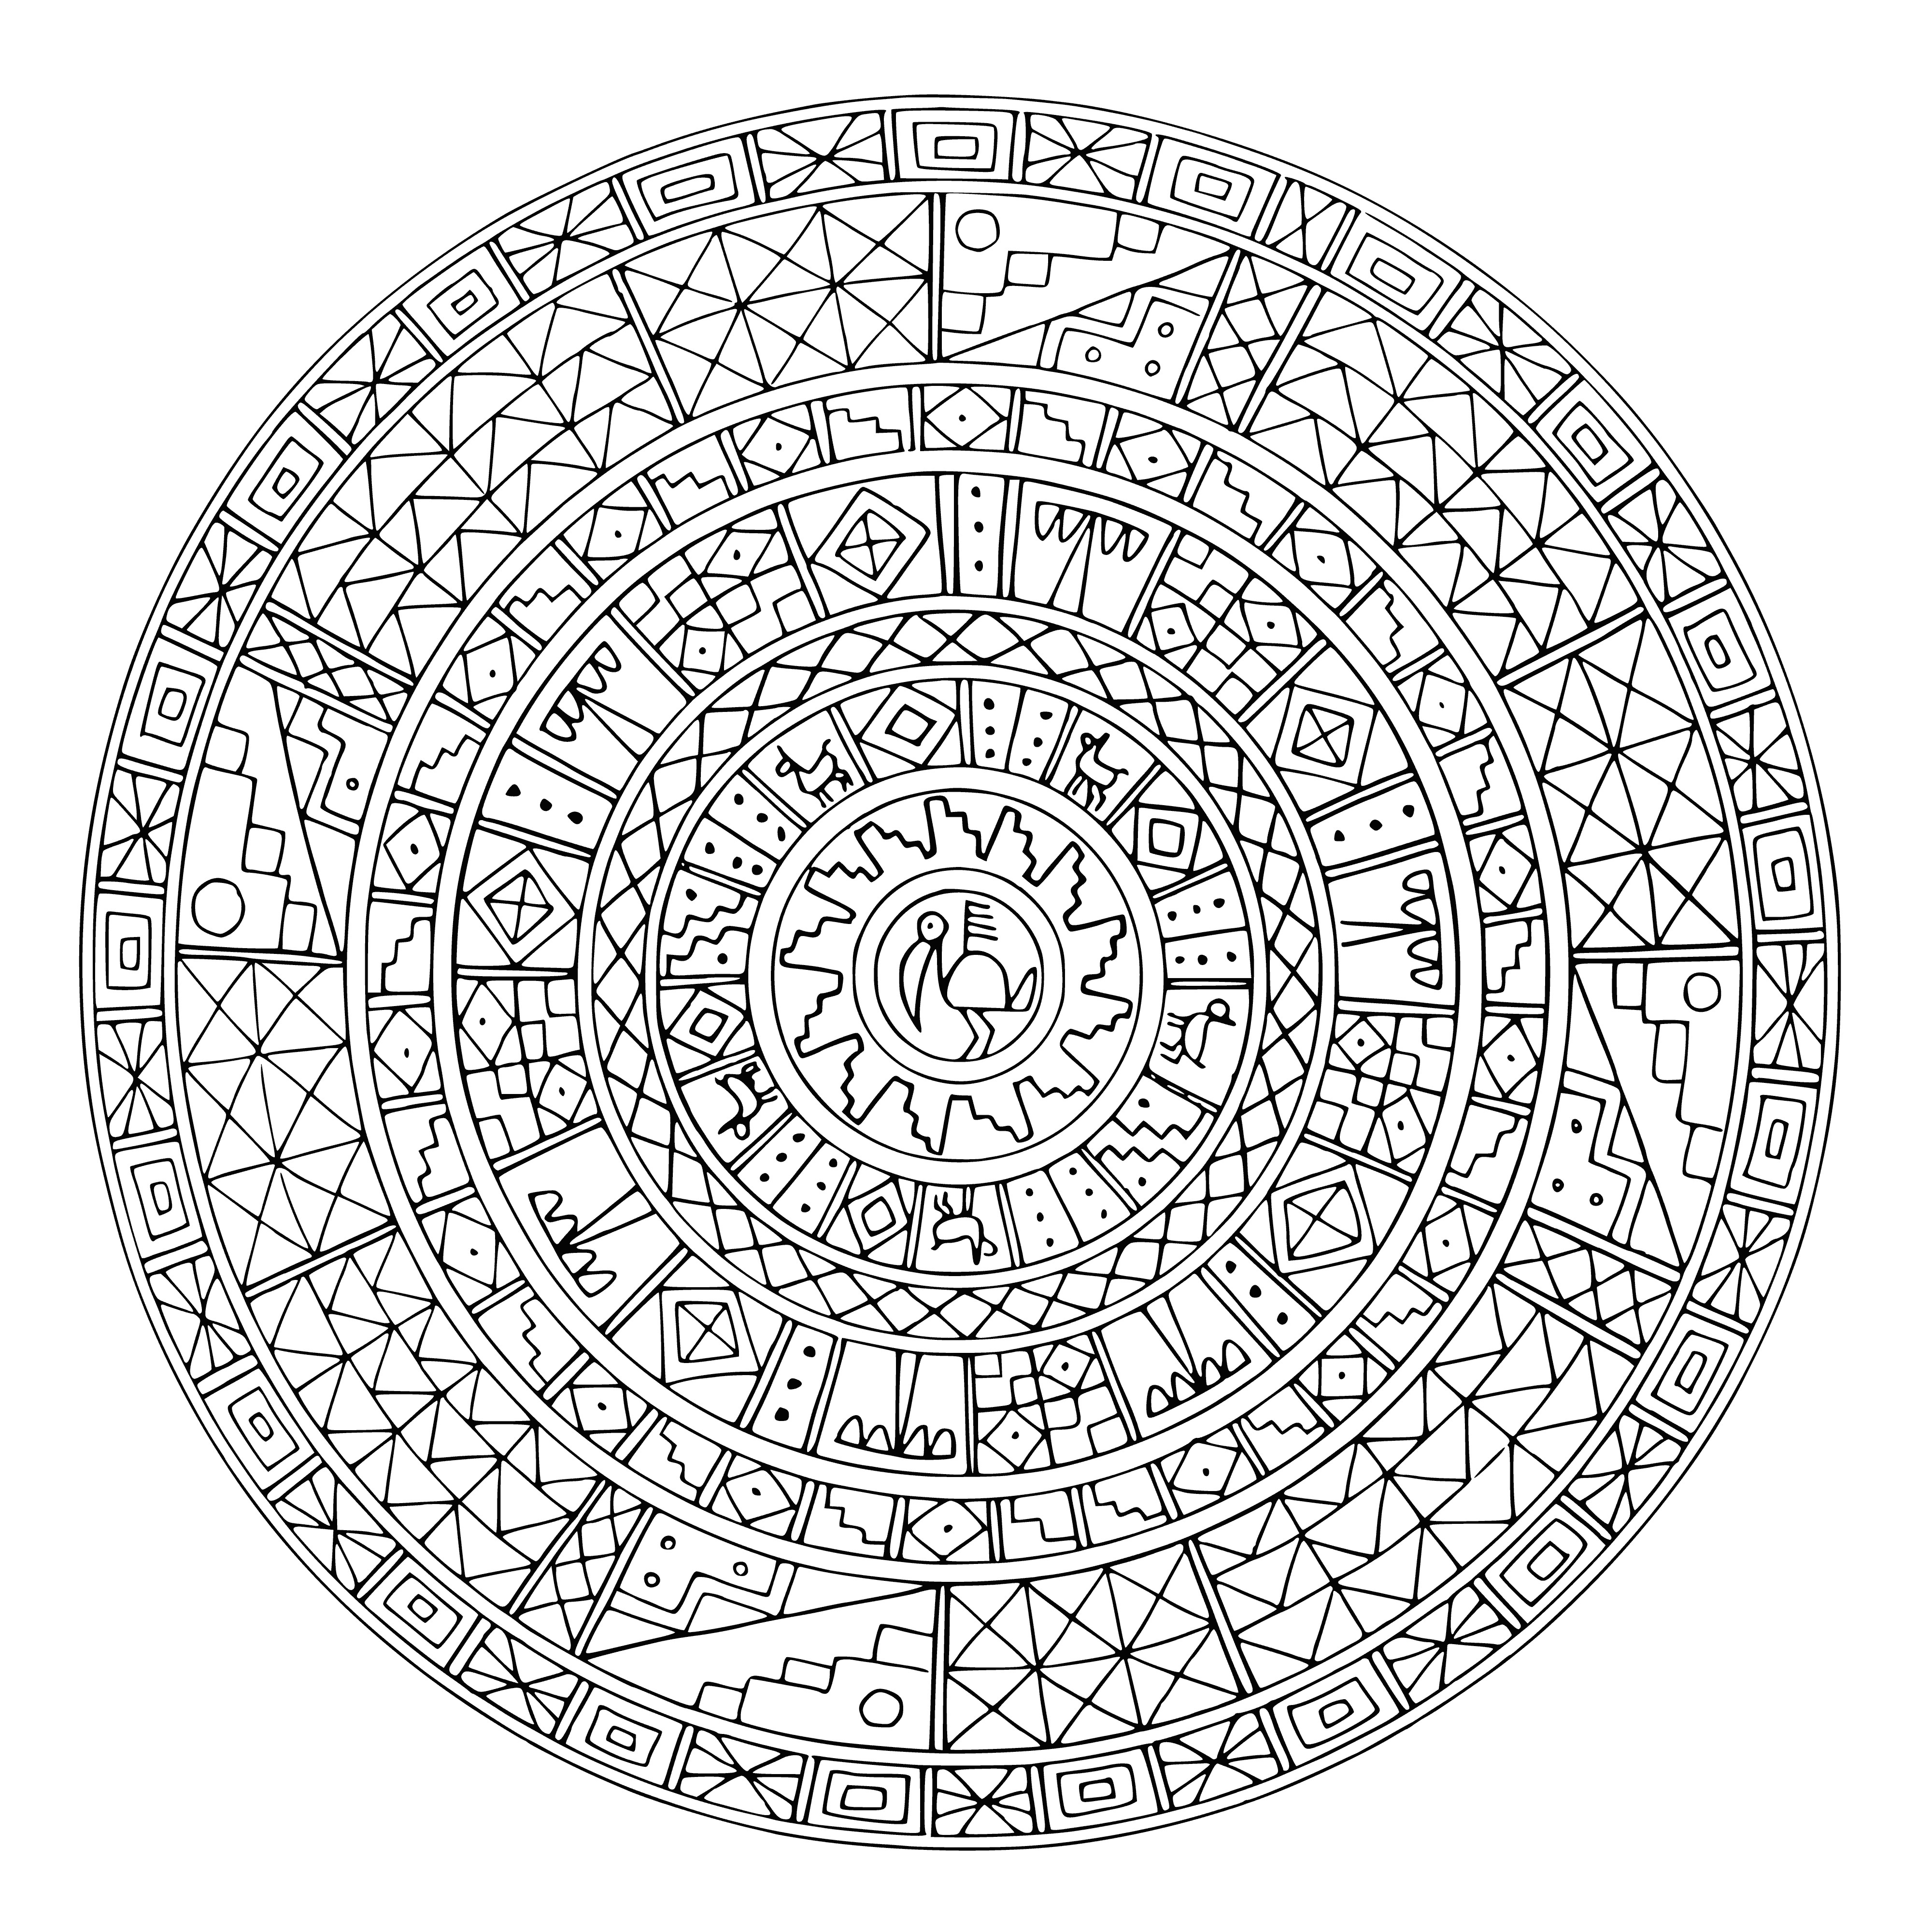 Complex mandala coloring page